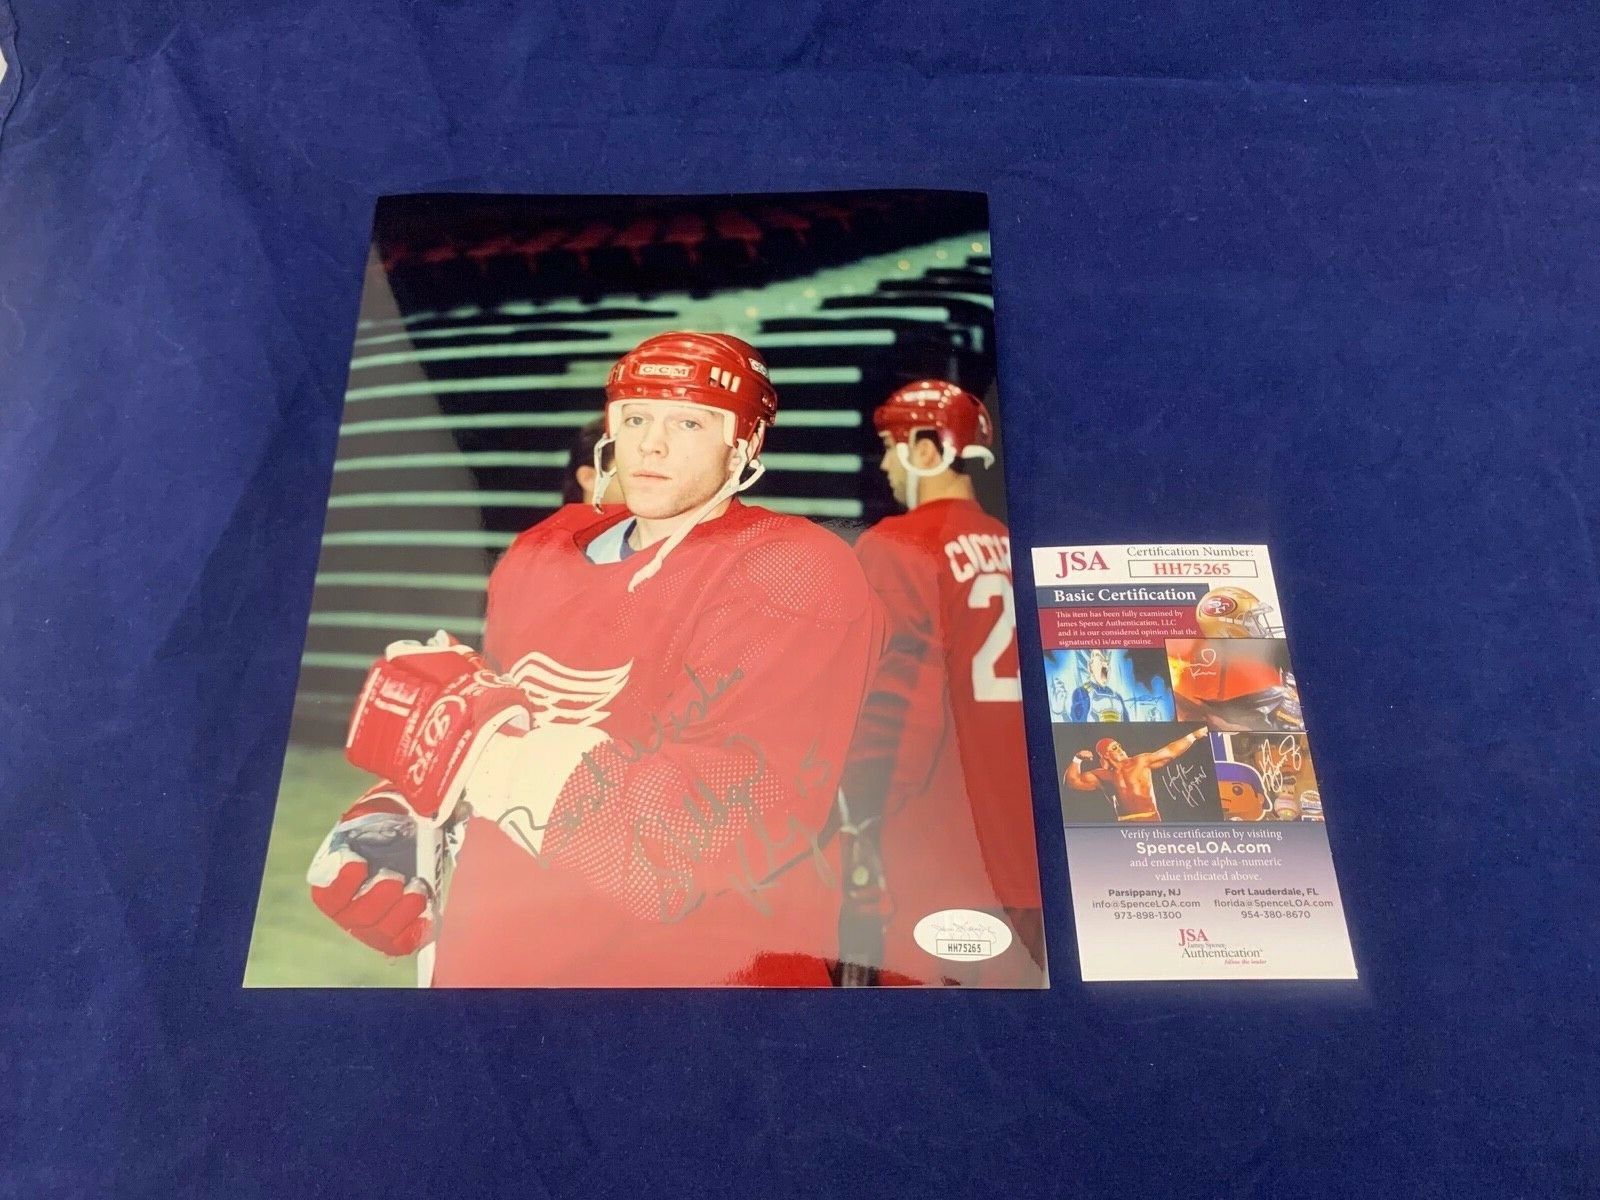 Sheldon Kennedy Detroit Red Wings Autographed 8x10 Photo JSA COA HH75265